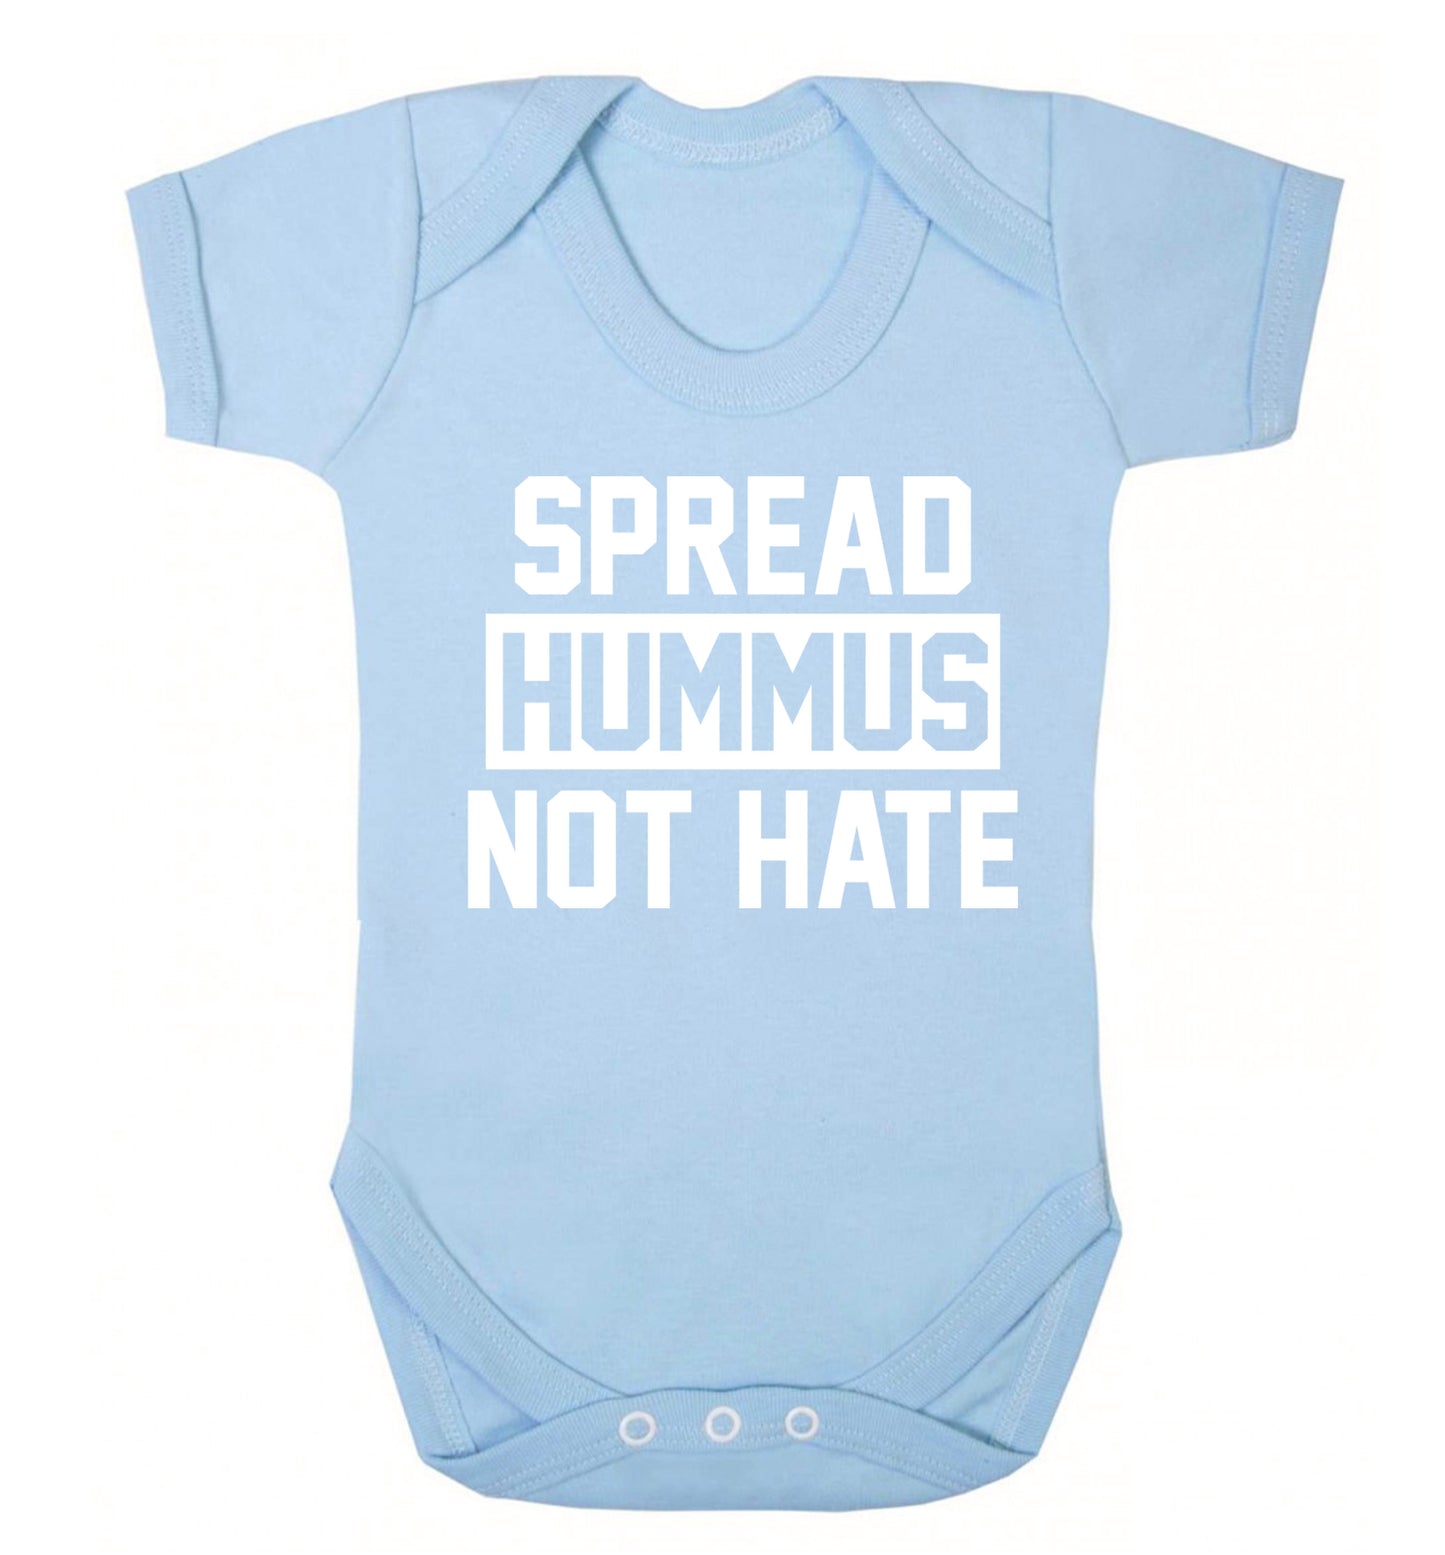 Spread hummus not hate Baby Vest pale blue 18-24 months